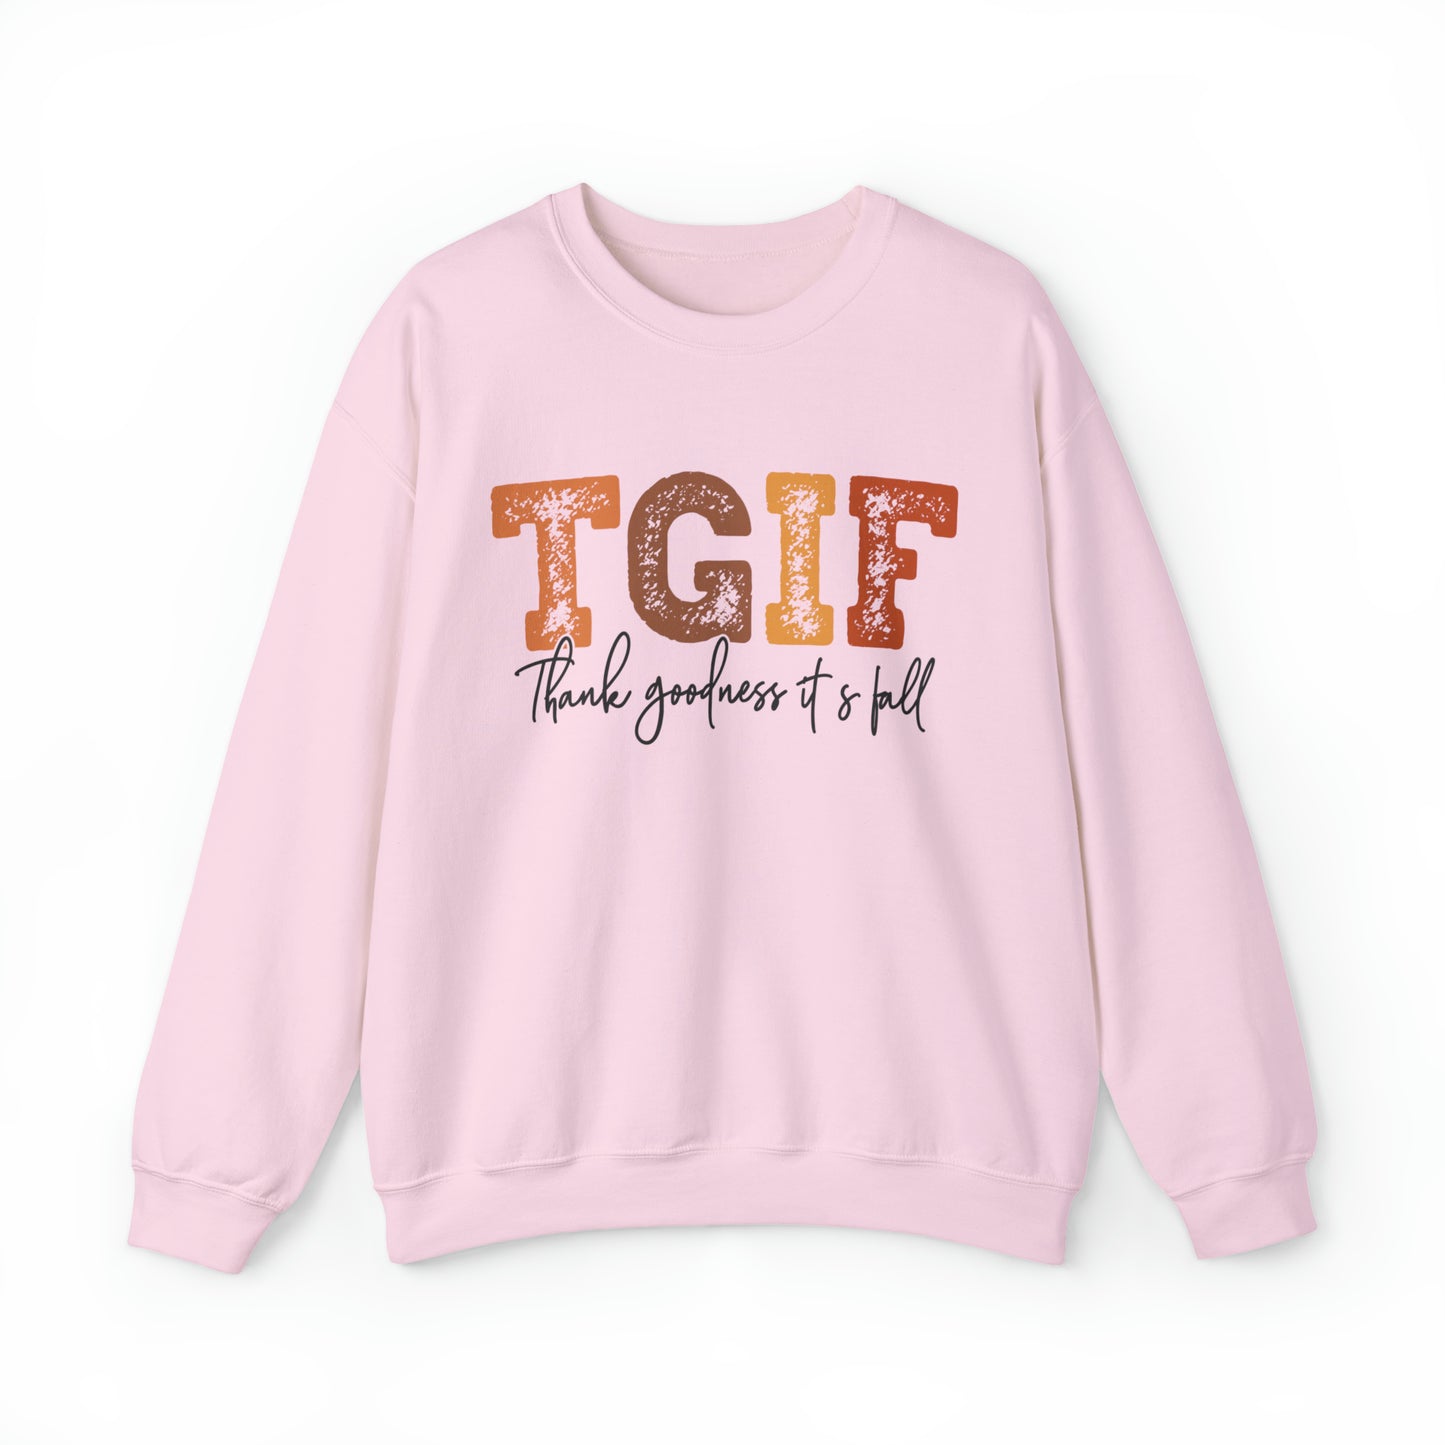 TGIF Fall Crewneck Sweatshirt